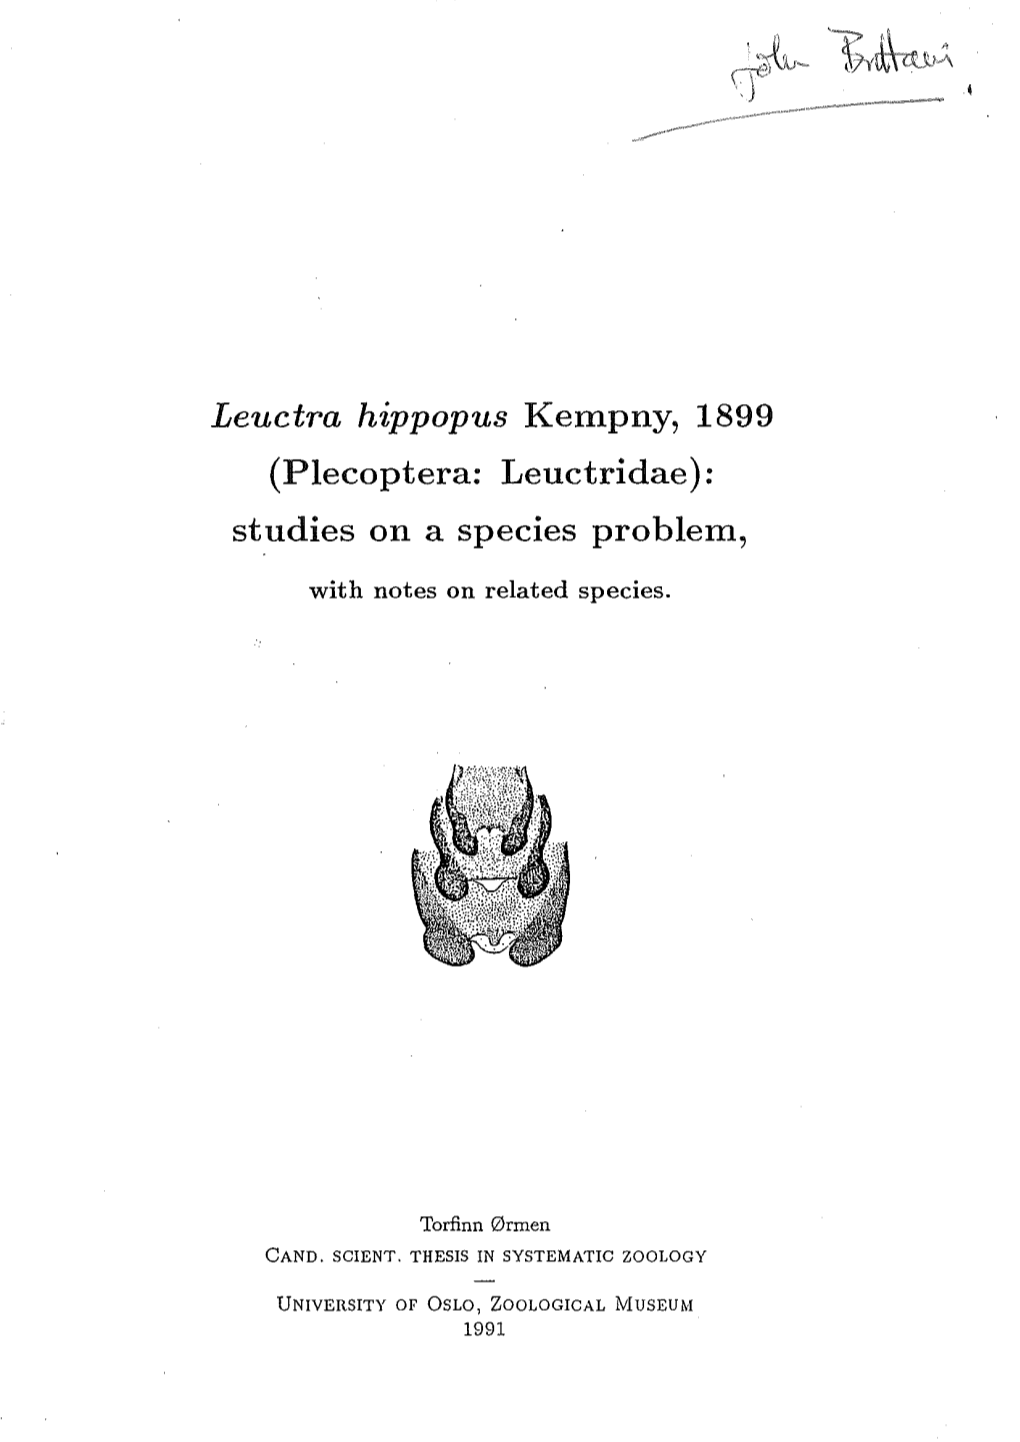 Leuctra Hippopus Kempny, 1899 (Plecoptera: Leuctridae): Studies on a Species Problem